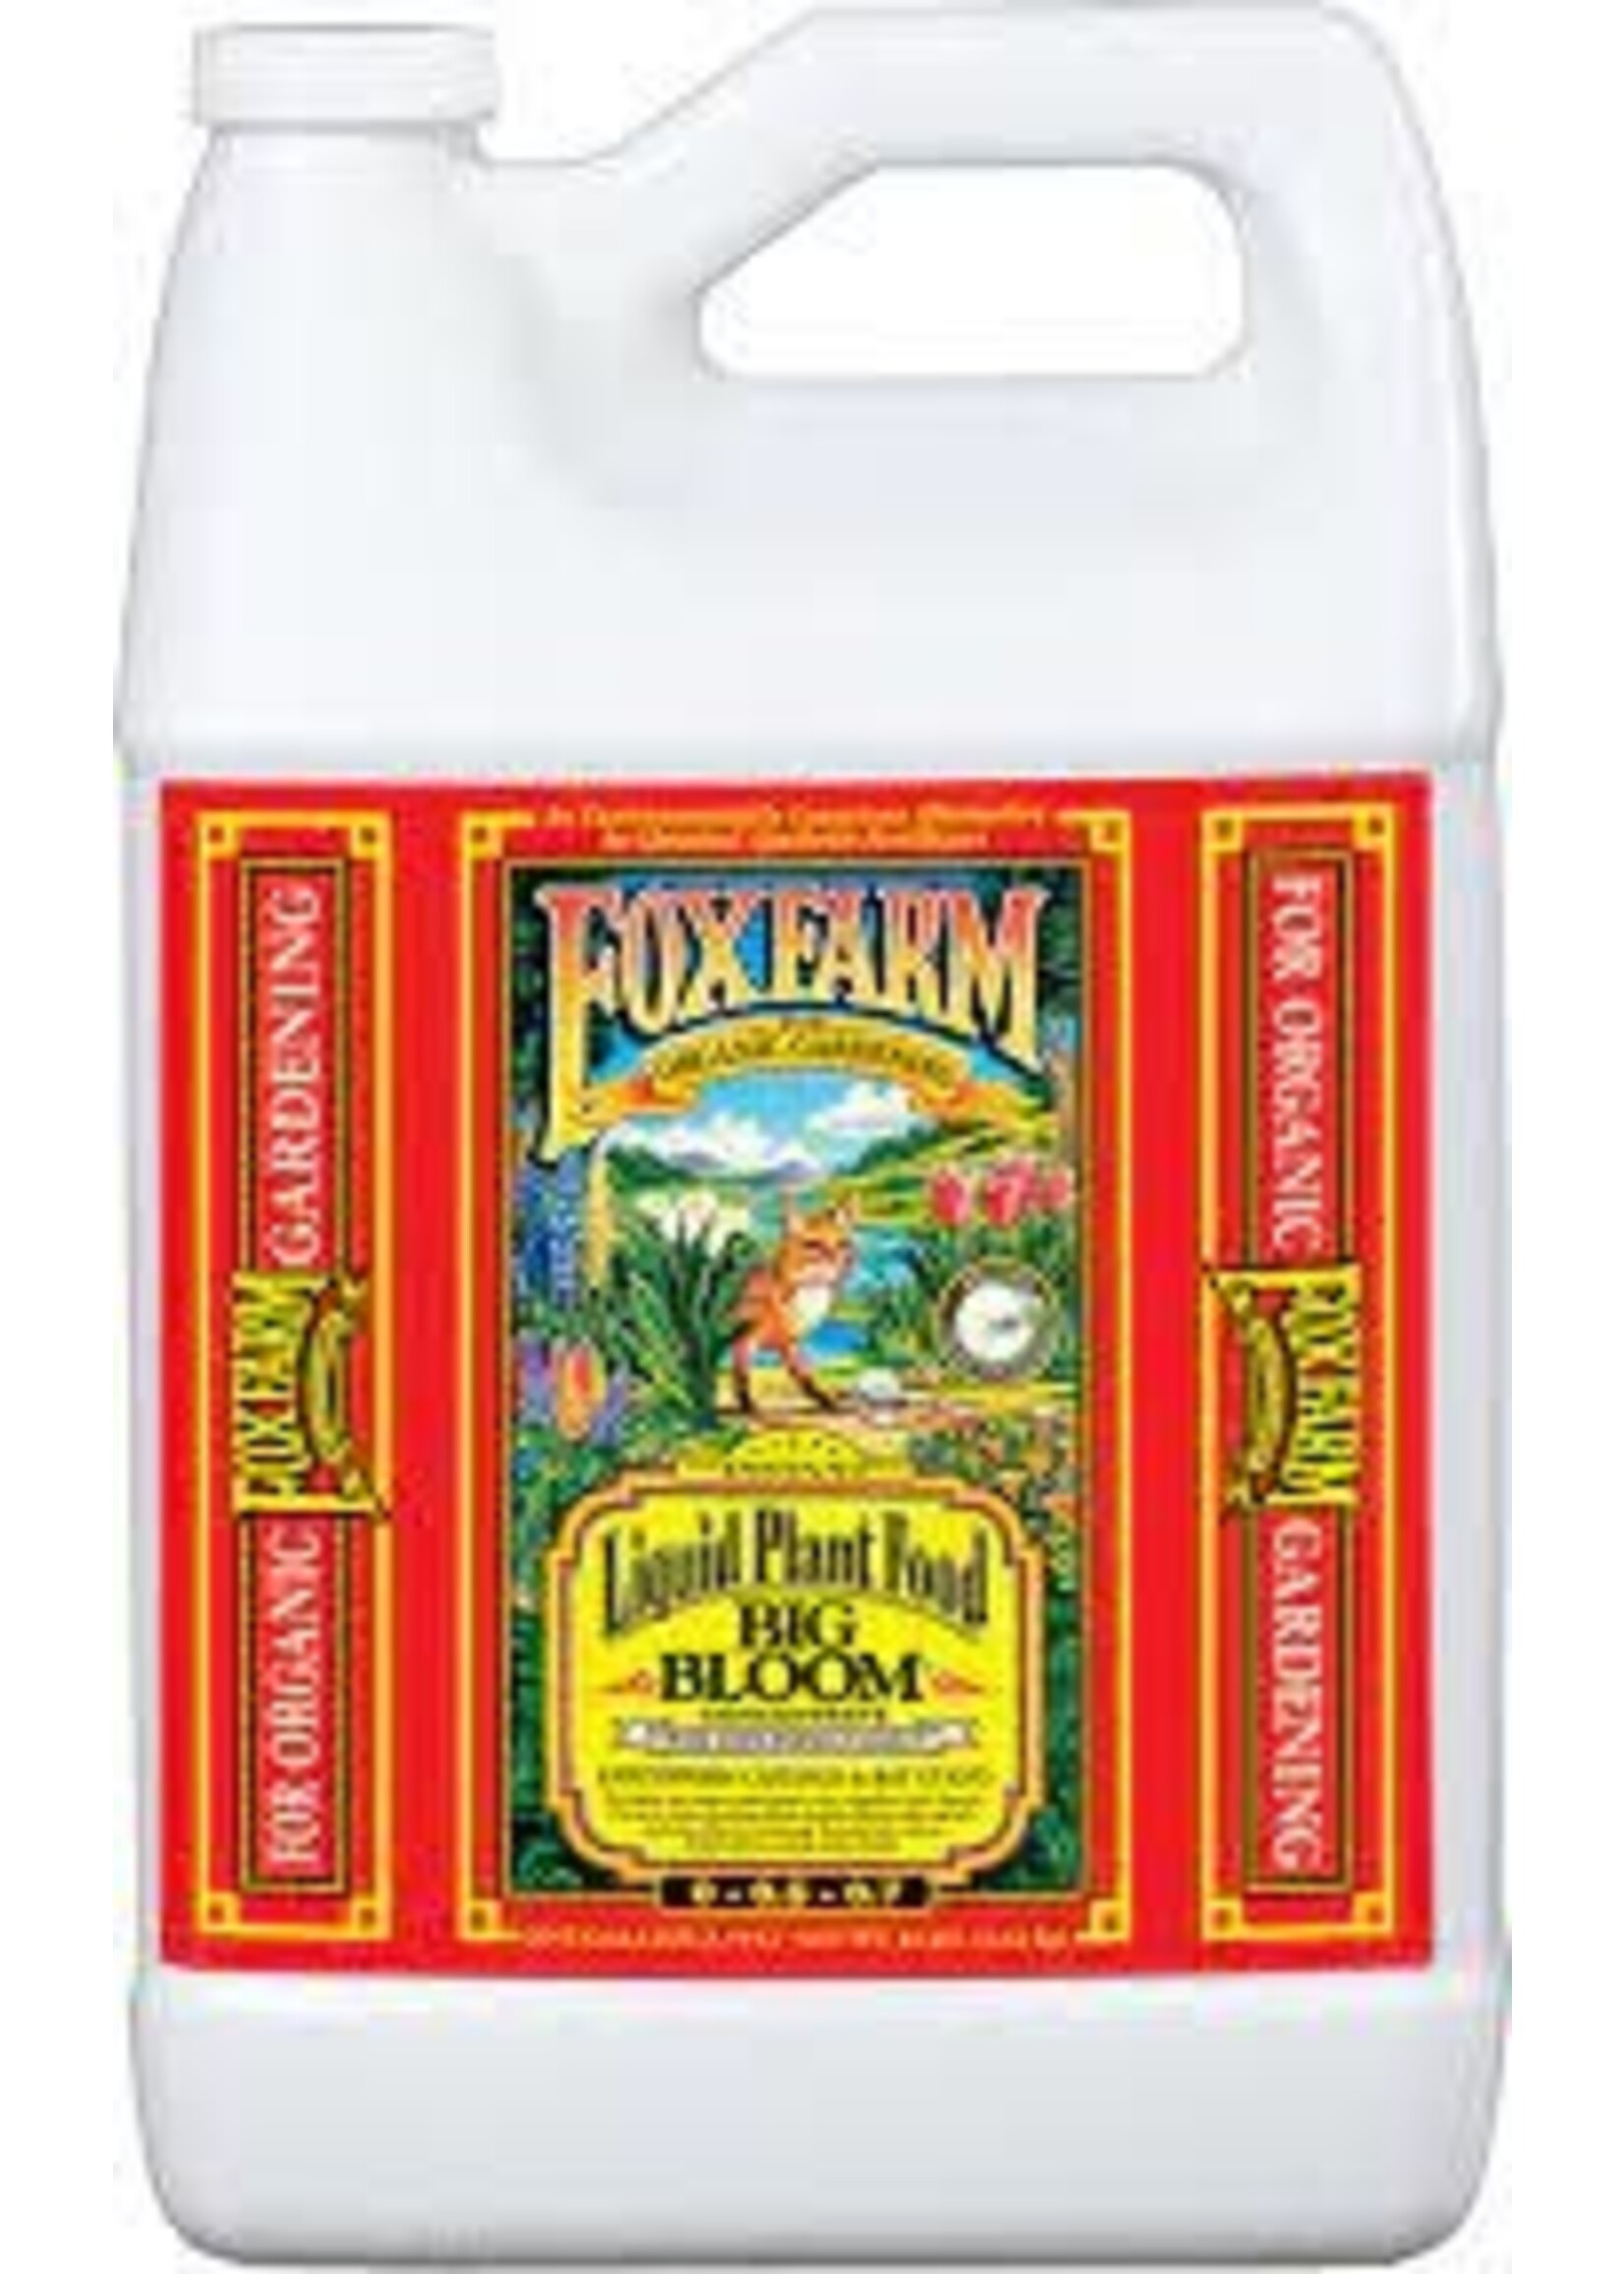 FoxFarm Big Bloom Liquid Concentrate